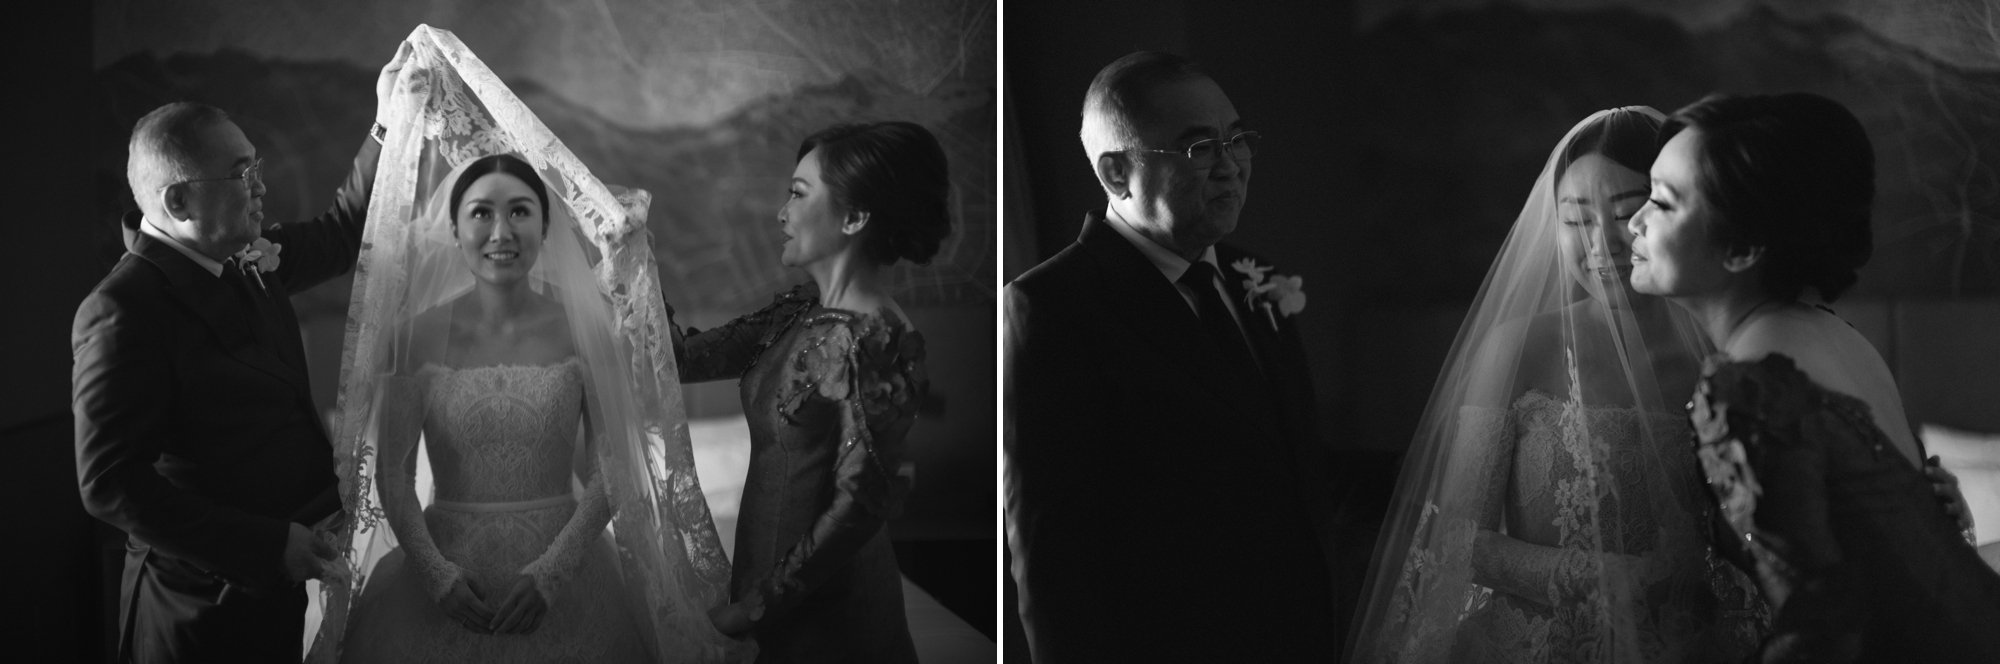 Prawira-Evelyn-Dolomites-Italy-Santre wedding-Yefta Gunawan-Jeriko MUA-Carol Kuntjoro Photography-40.jpg